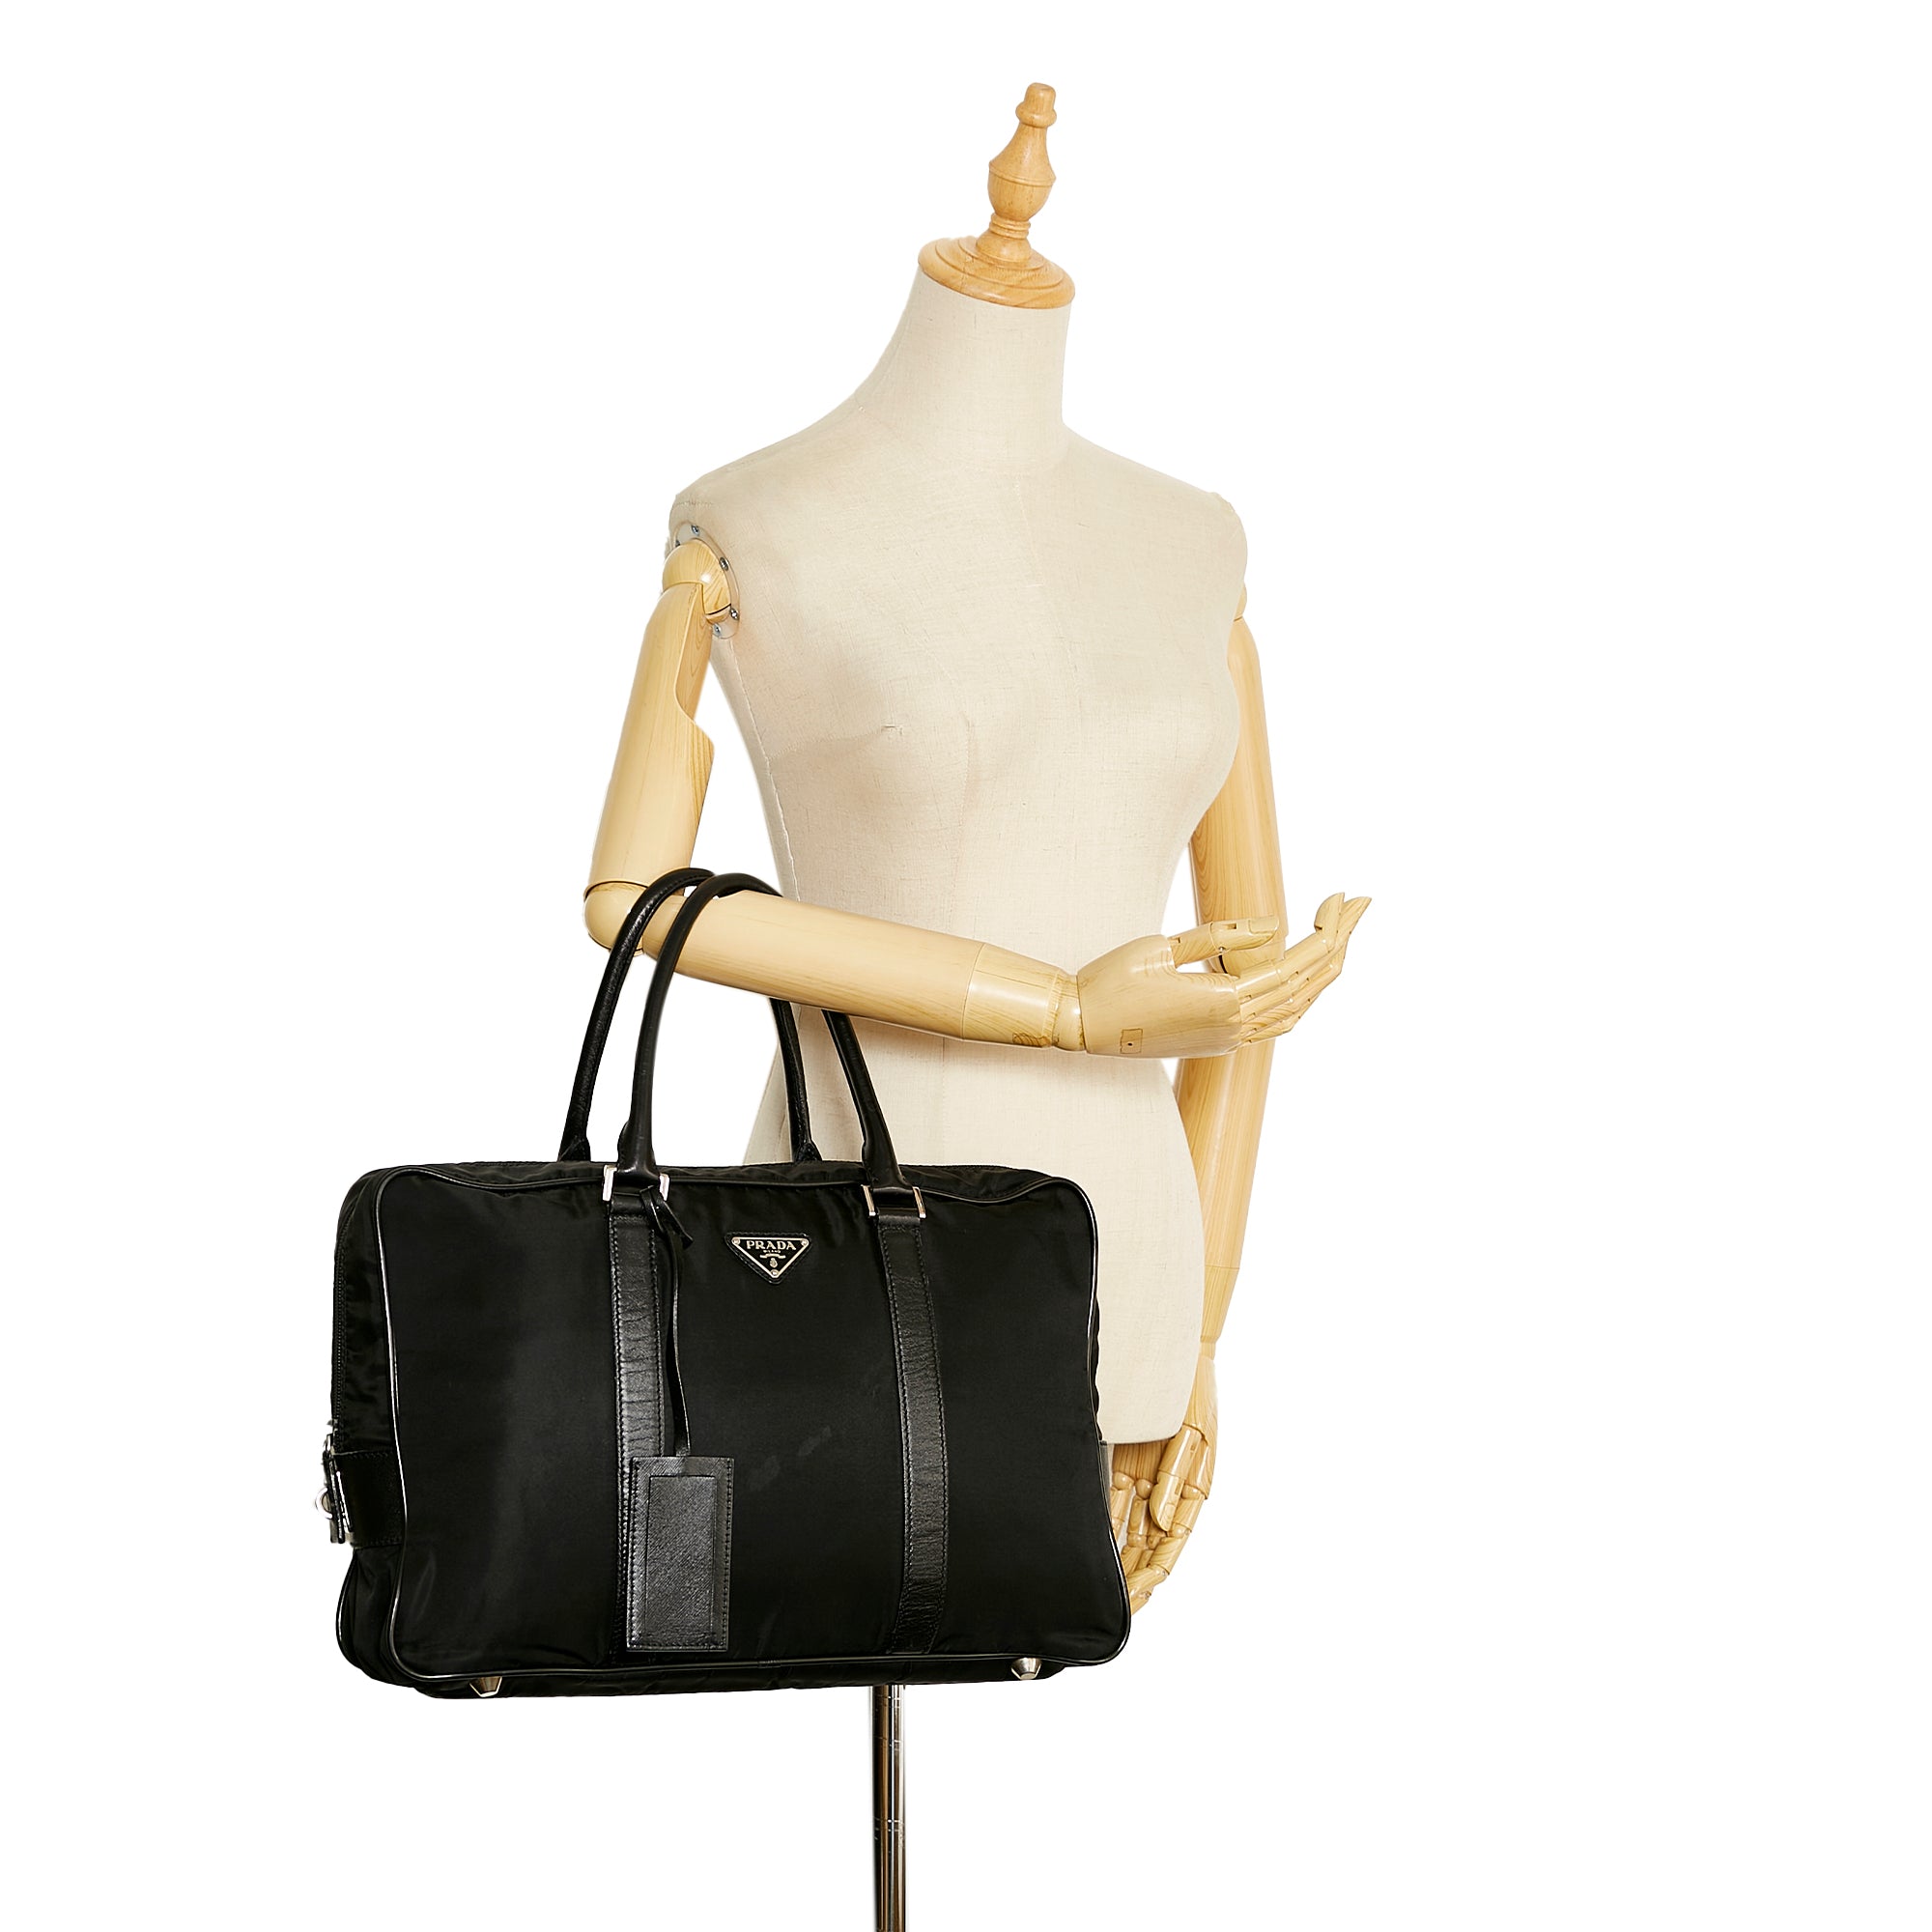 Prada business bag in nylon and Saffiano leather